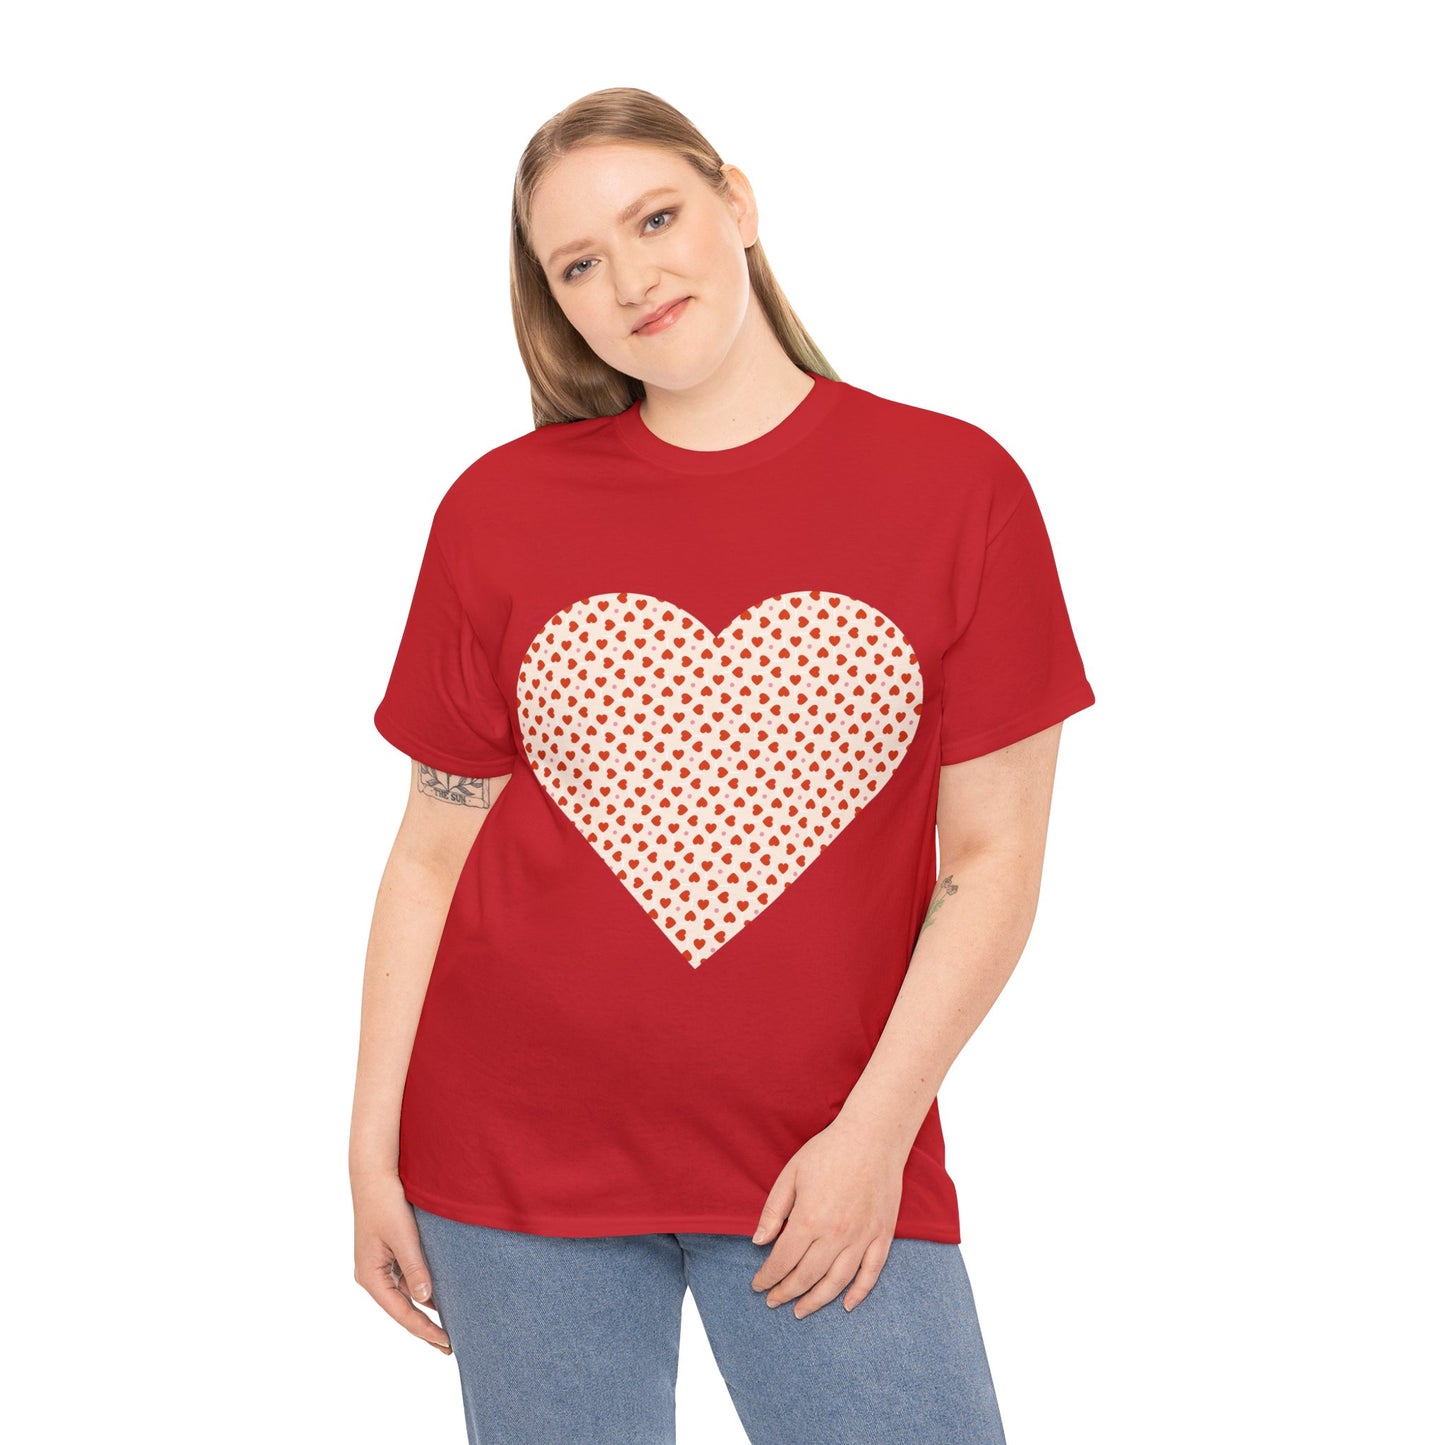 Heart Dots T-shirt: Spread Love Everywhere You Go